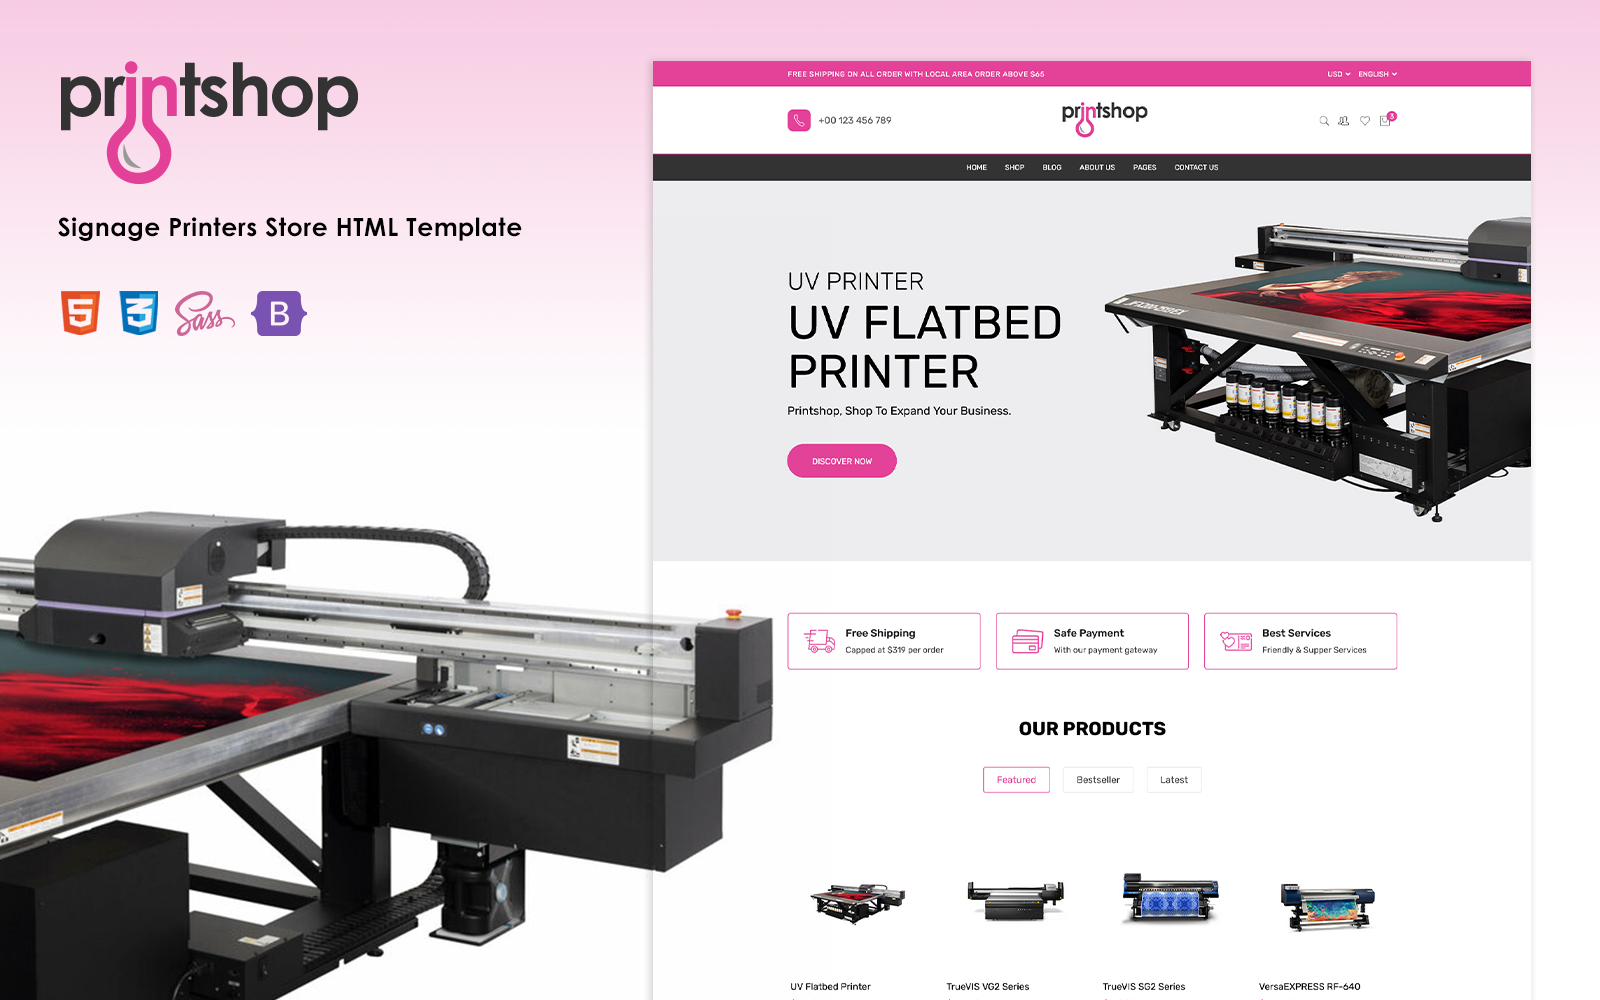 Printshop - Signage Printers Store HTML Template